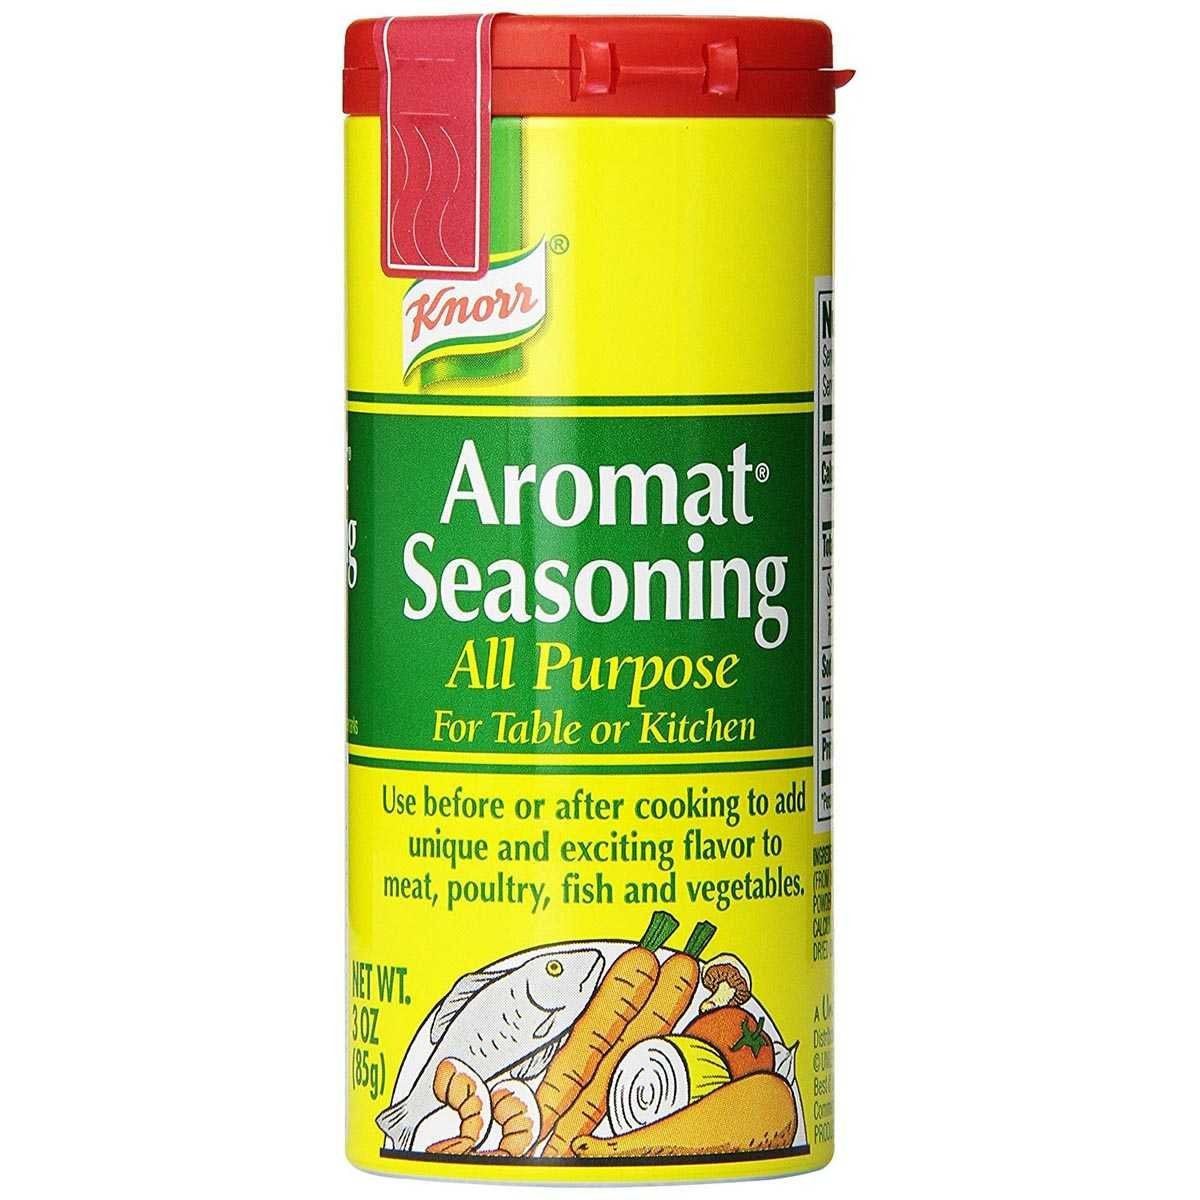 Condiment Knorr Aromat